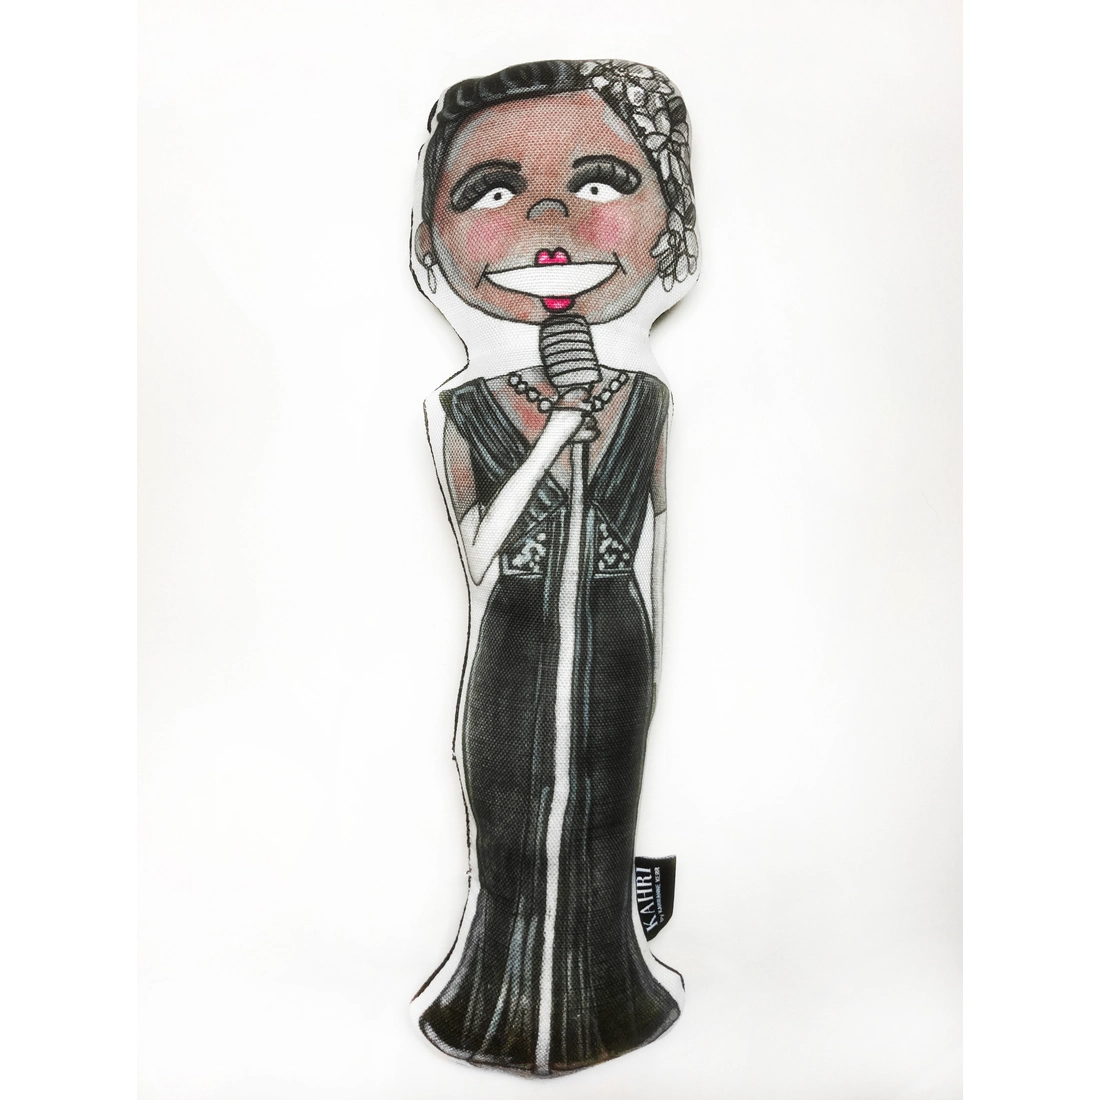 Little Billie Holiday doll